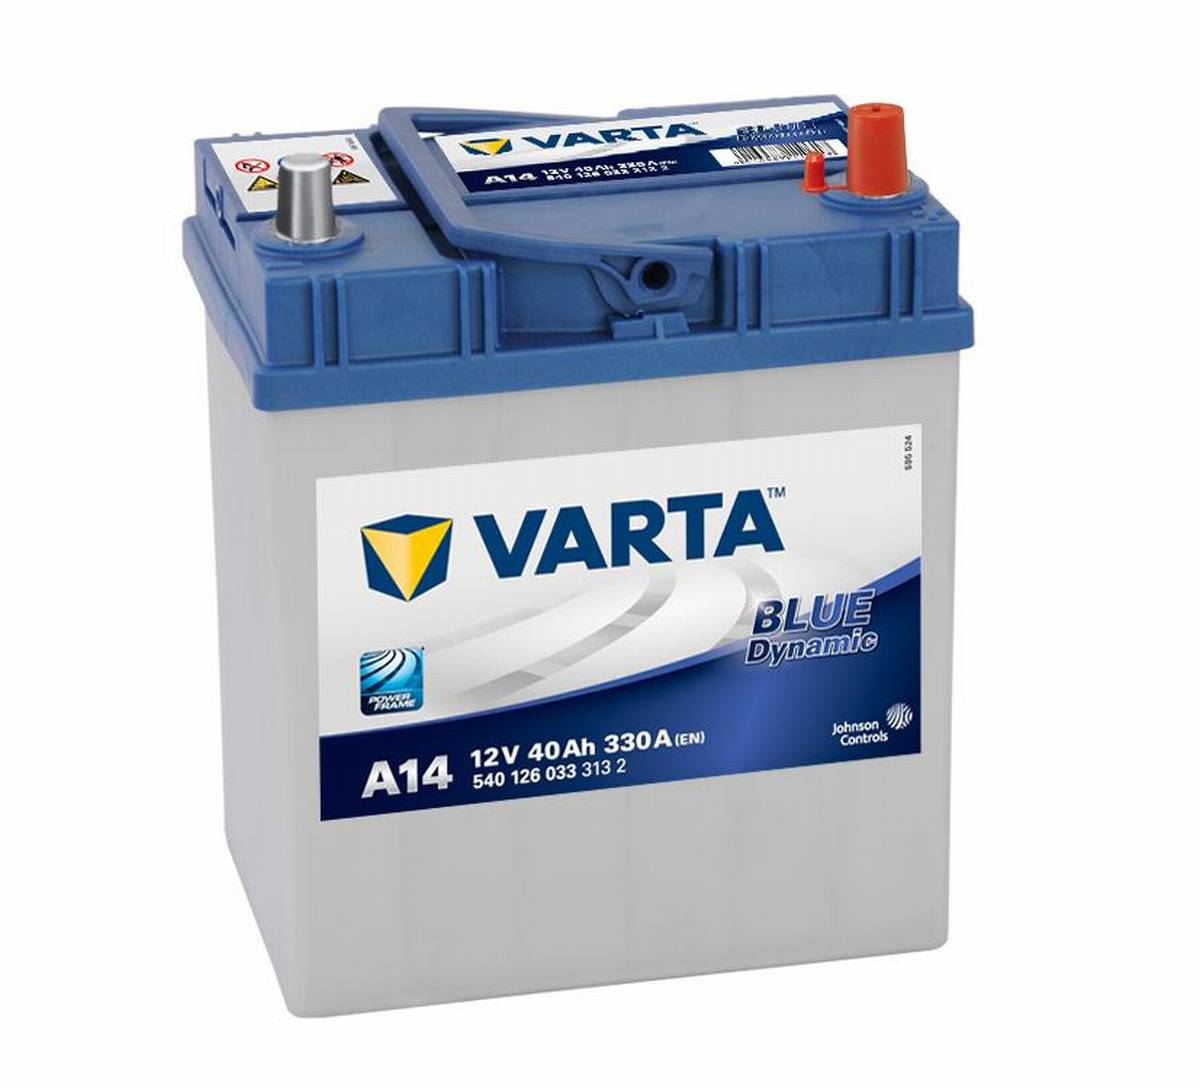 VARTA A14 Blue Dynamic 12V 40Ah 330A batteria auto 540 126 033